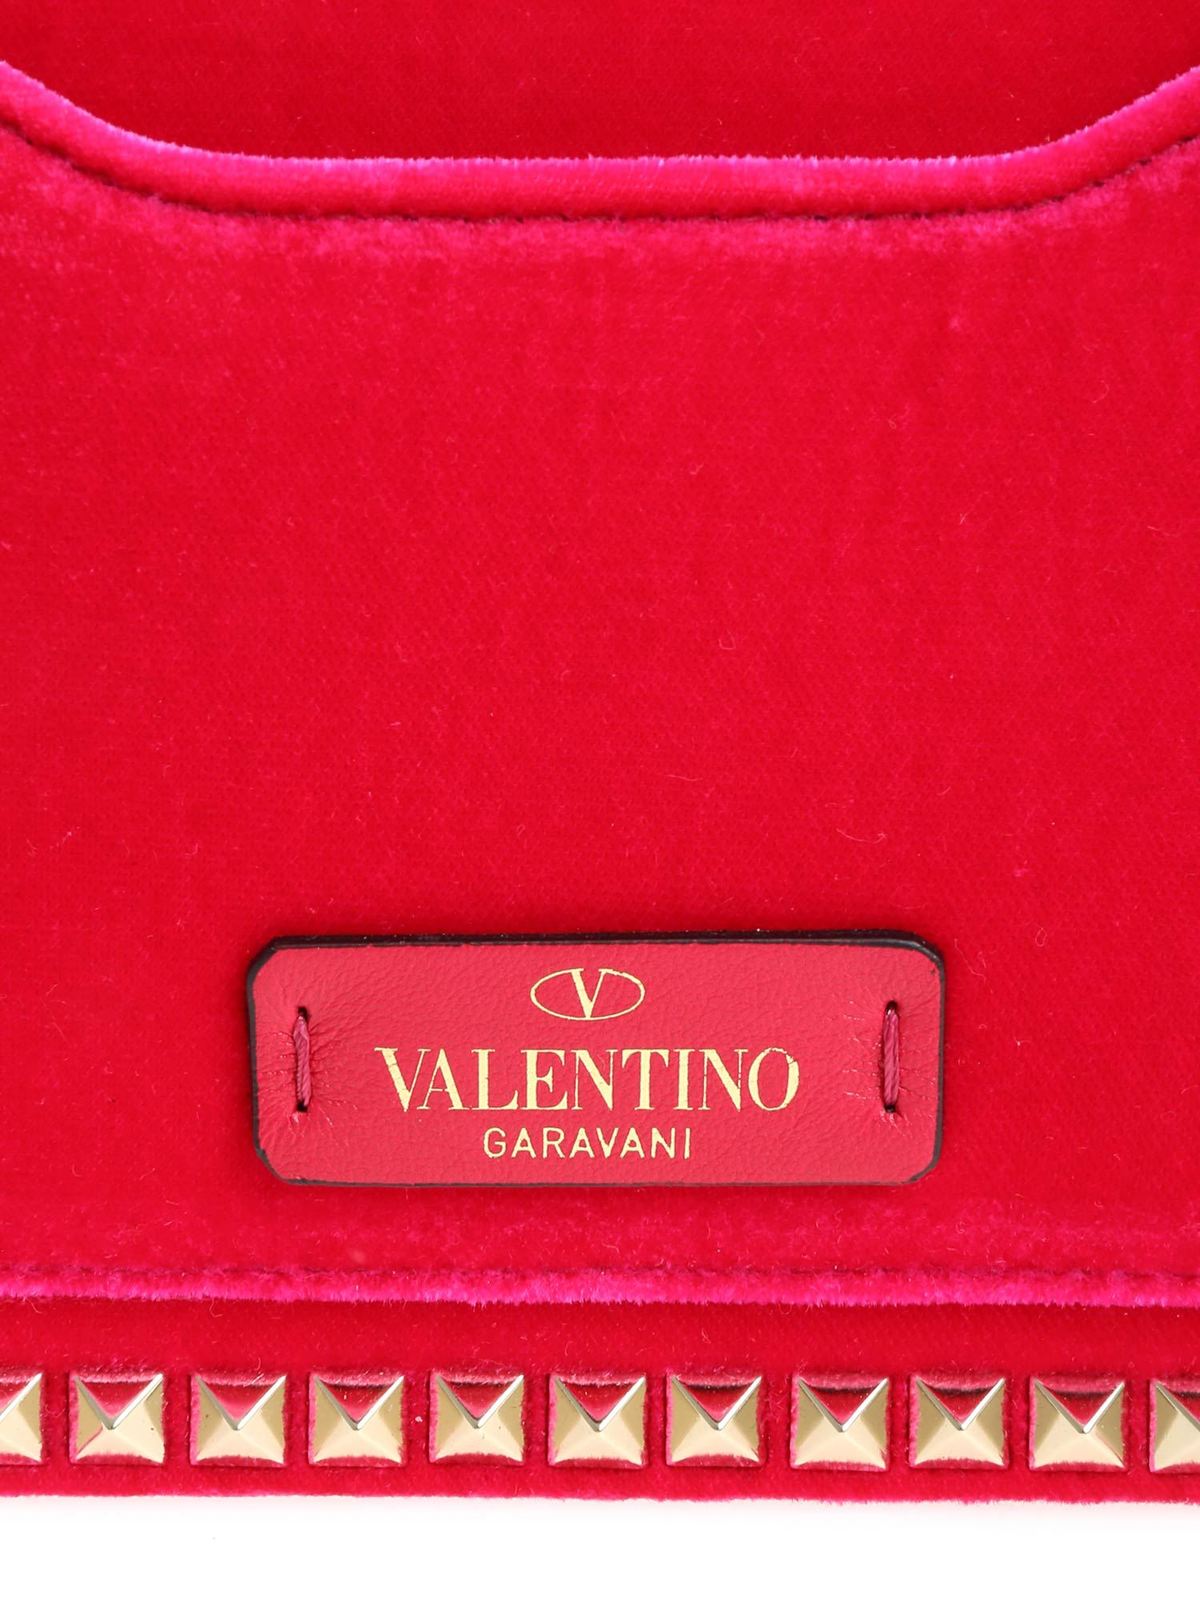 body bags Valentino Garavani Rockstud velvet leather bag - QW2B0C45WVMAM8